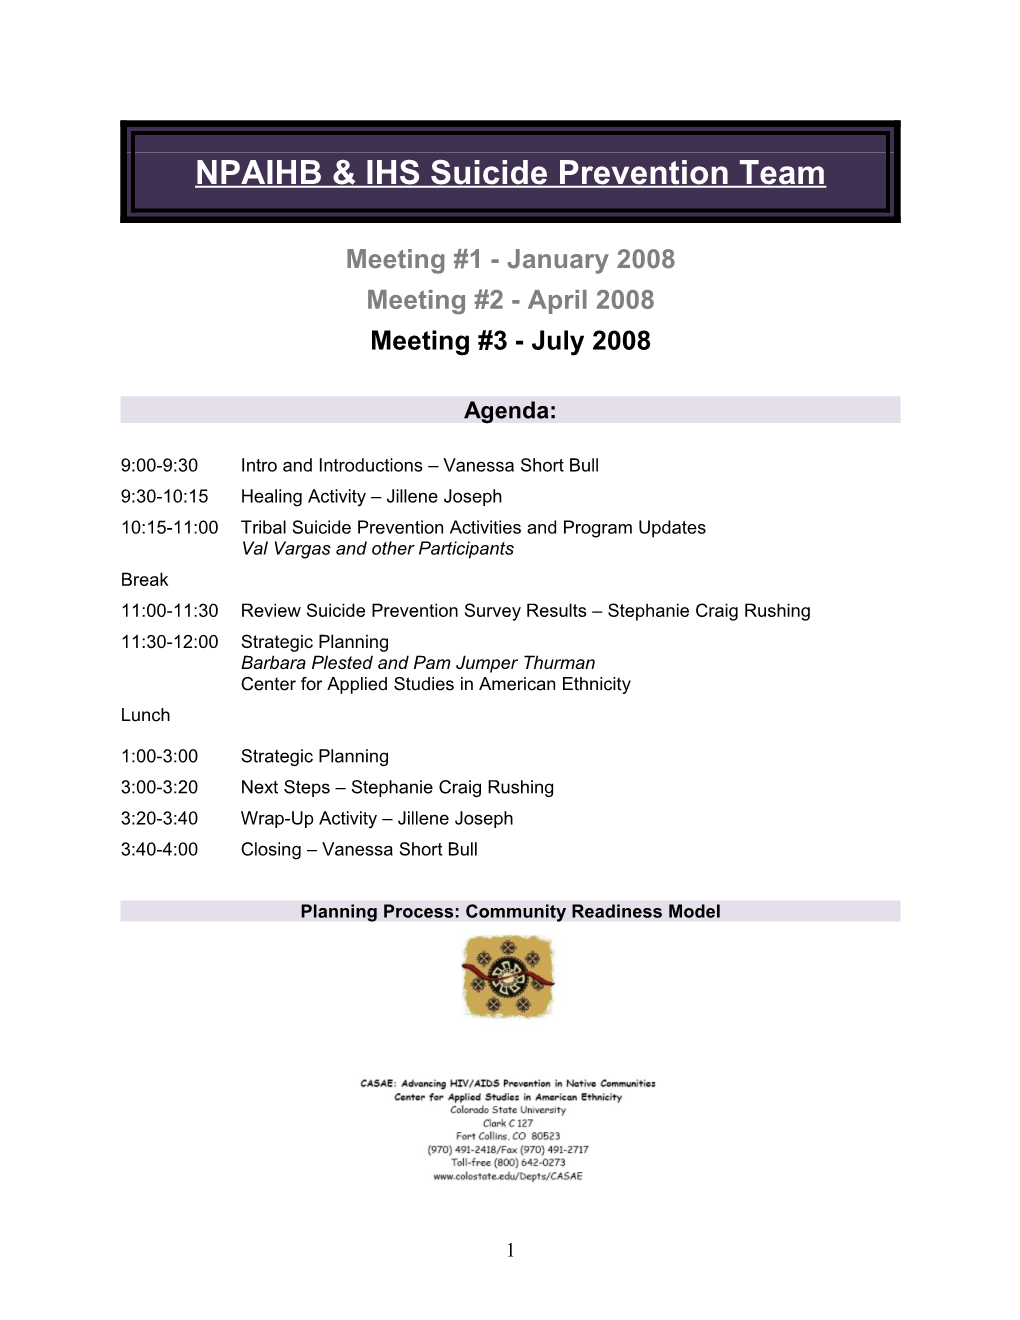 NPAIHB Suicide Prevention Team